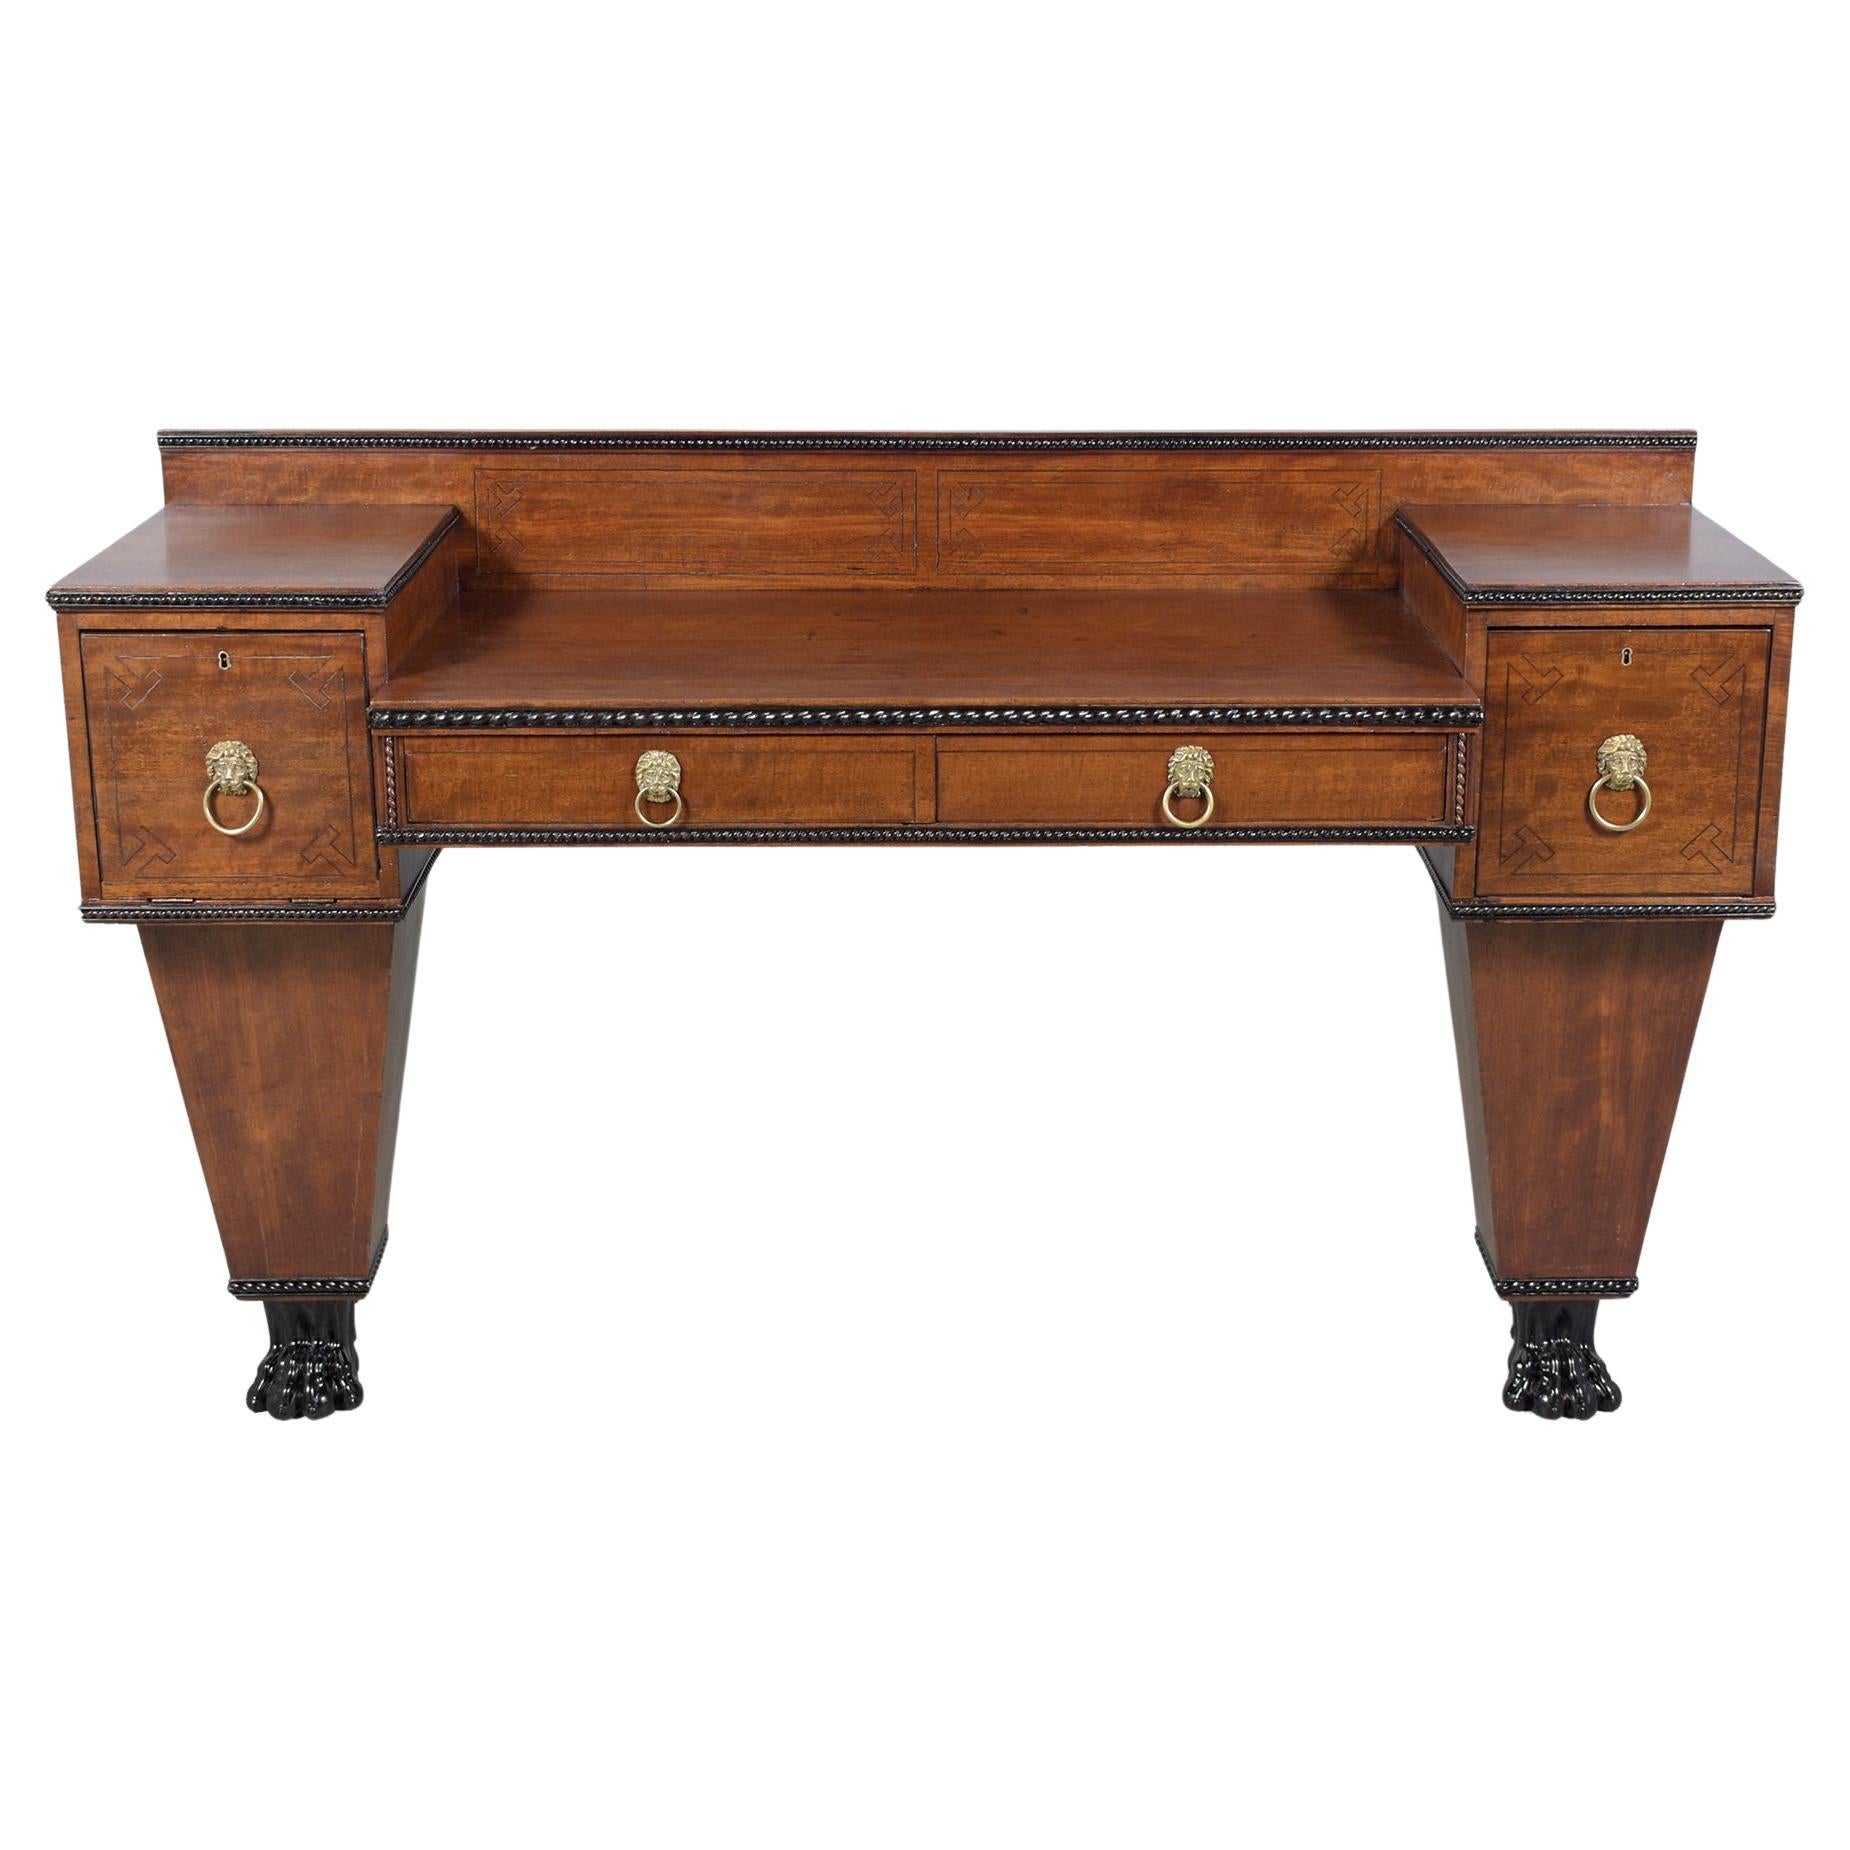 Late 19th Century George IV Mahogany Sideboard: Timeless Elegance Restored